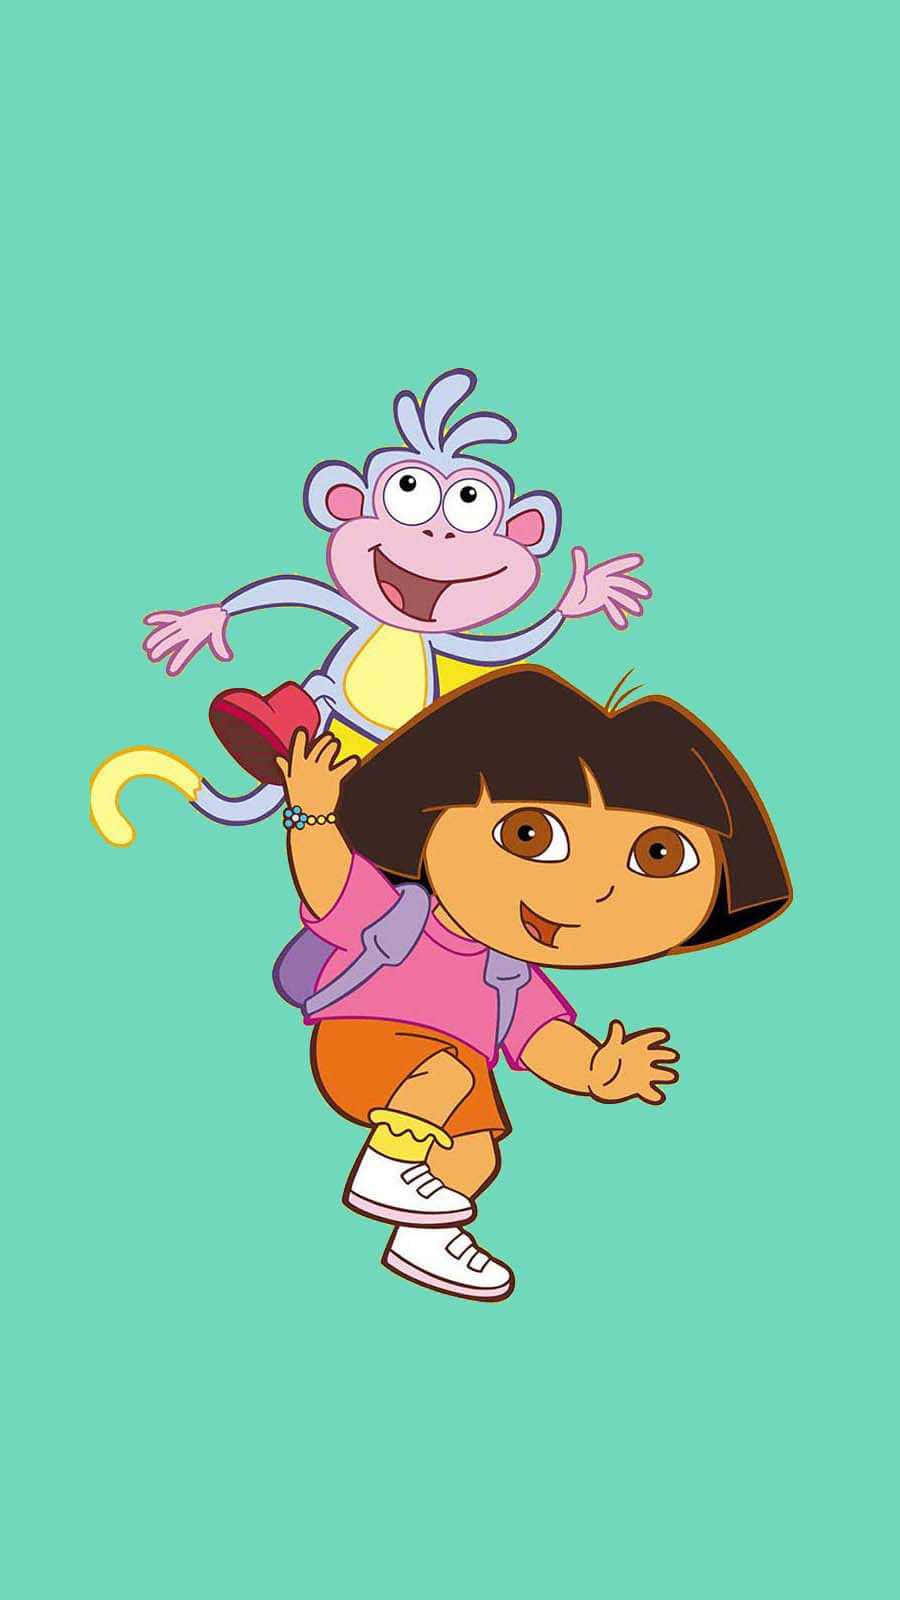 Join Dora on her next adventure!